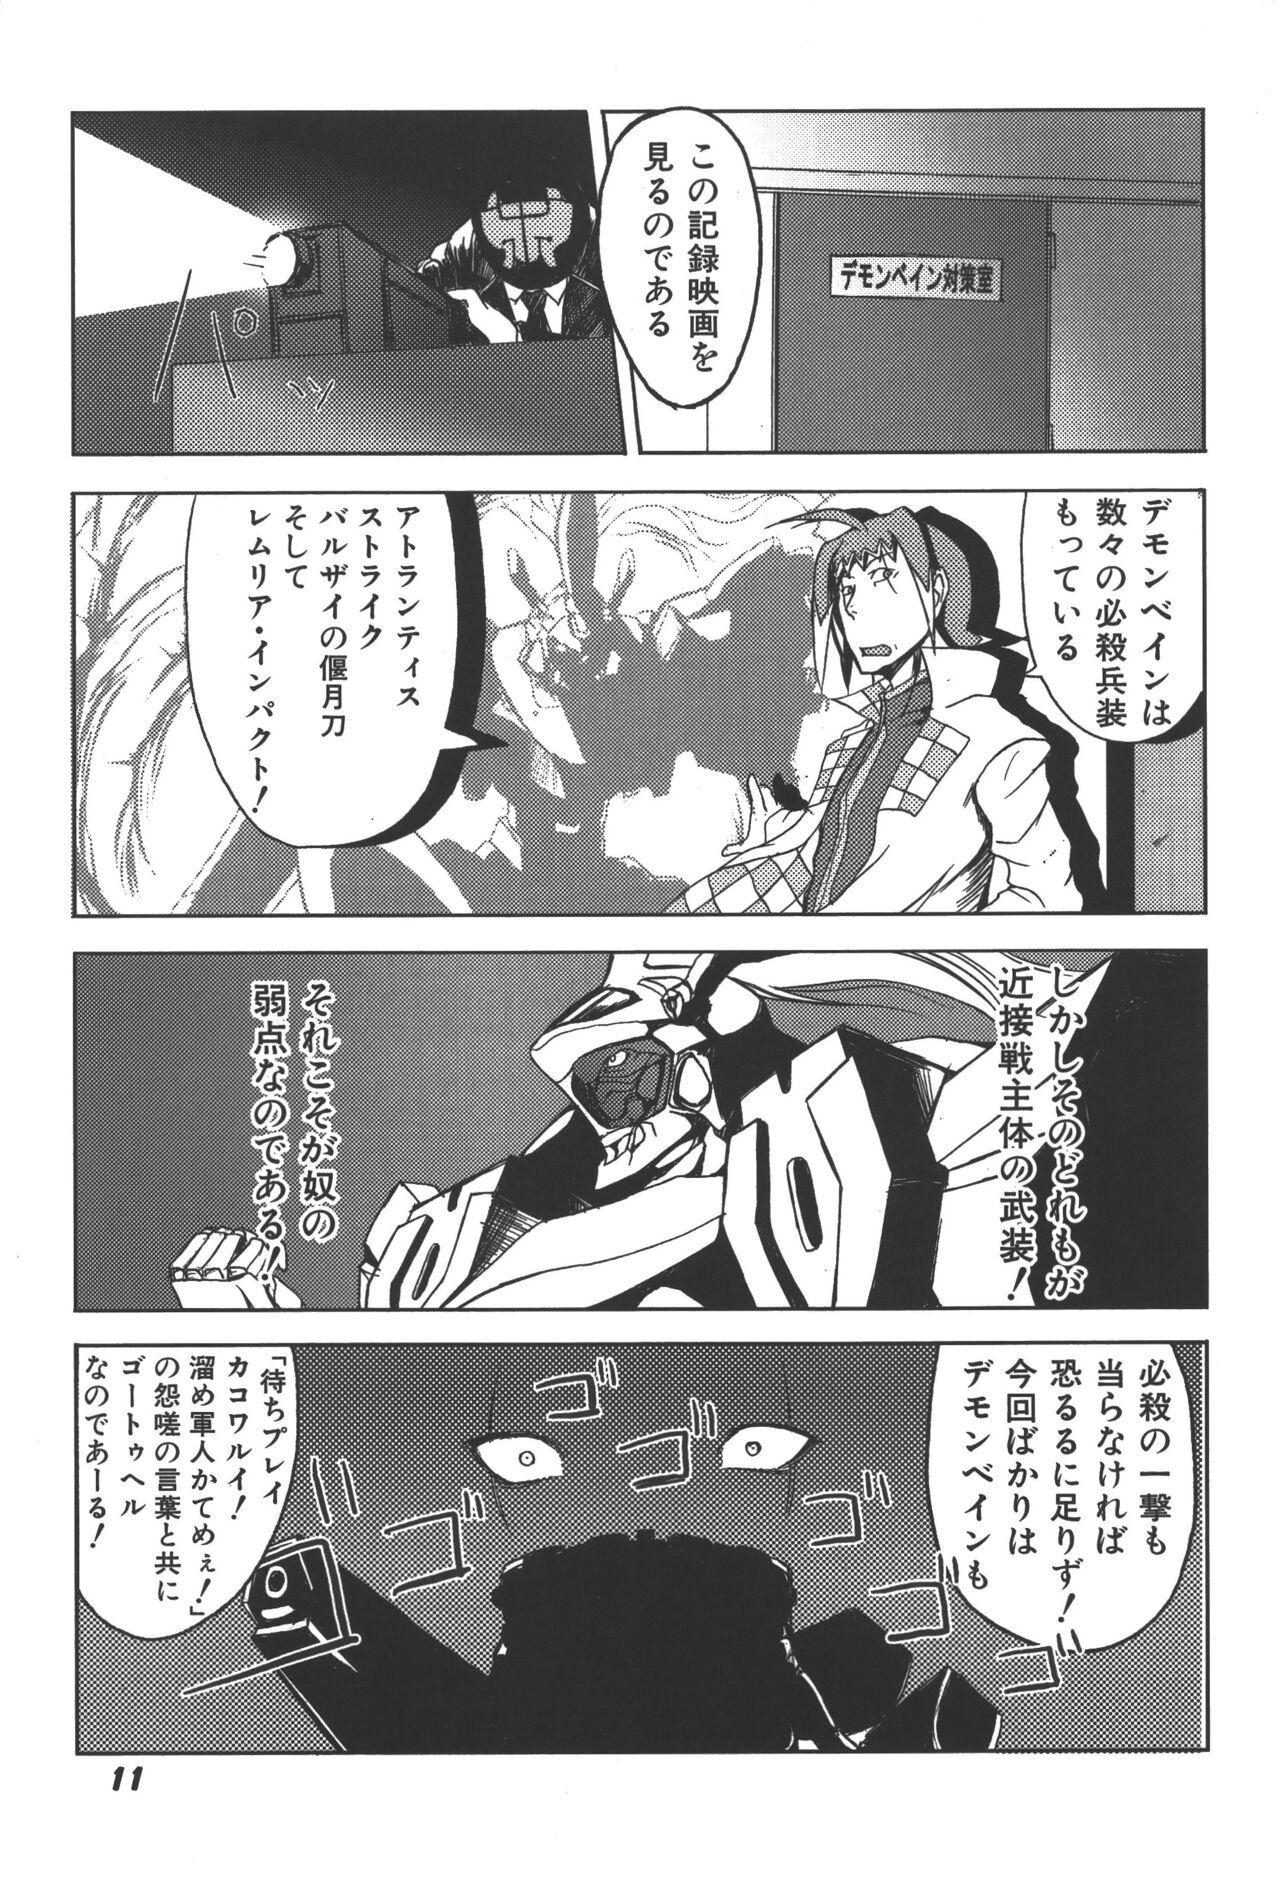 4some Zanma Taisei Demonbane Comic Anthology 2 - Demonbane Handsome - Page 10